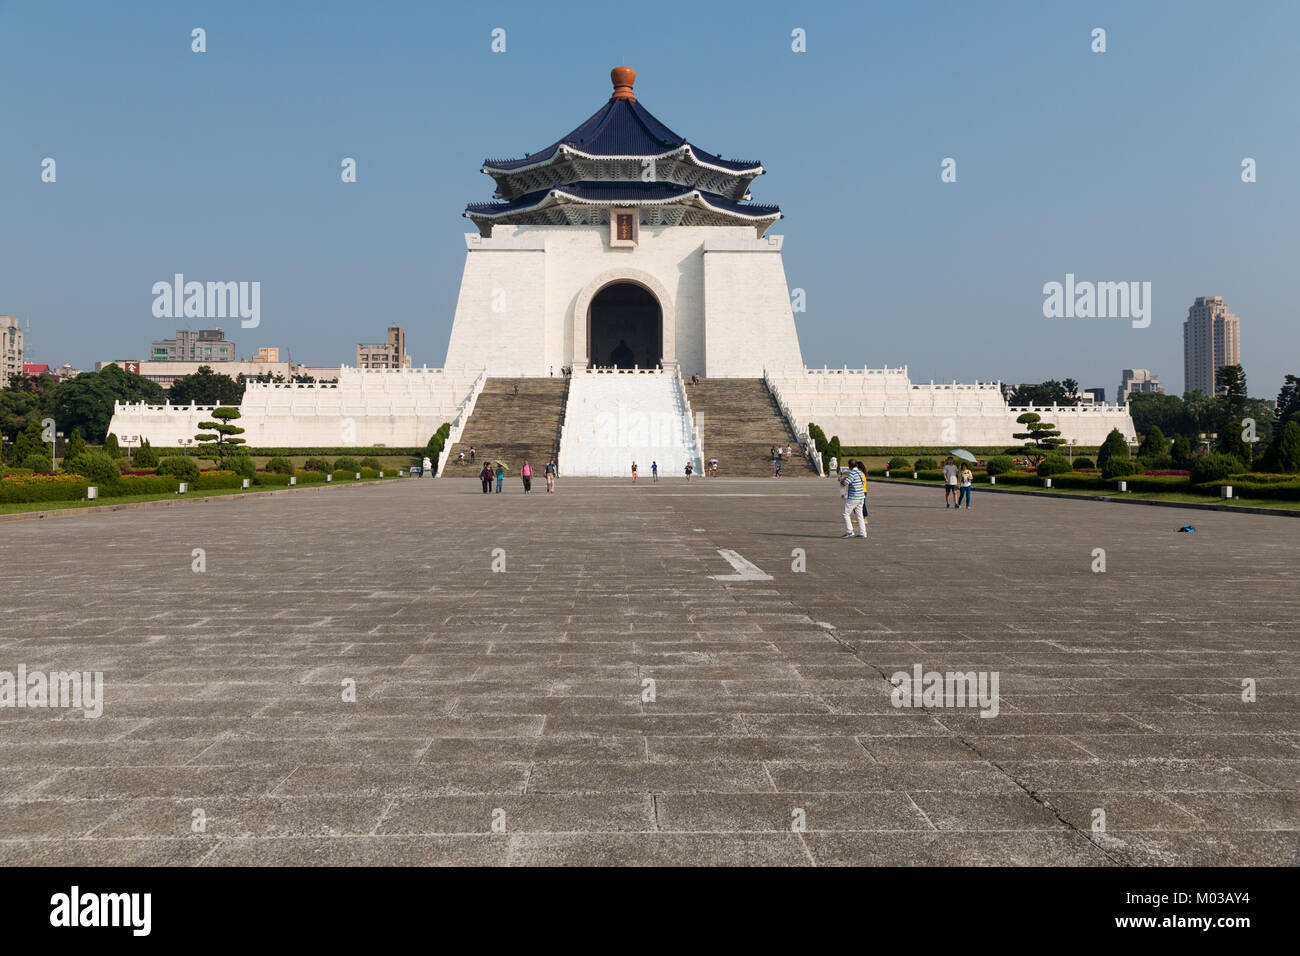 The most prominent historical landmark in Taiwan, the Chiang Kai-shek Memorial Hall in the Zhongzheng District, Taipei, Taiwan. Stock Photo